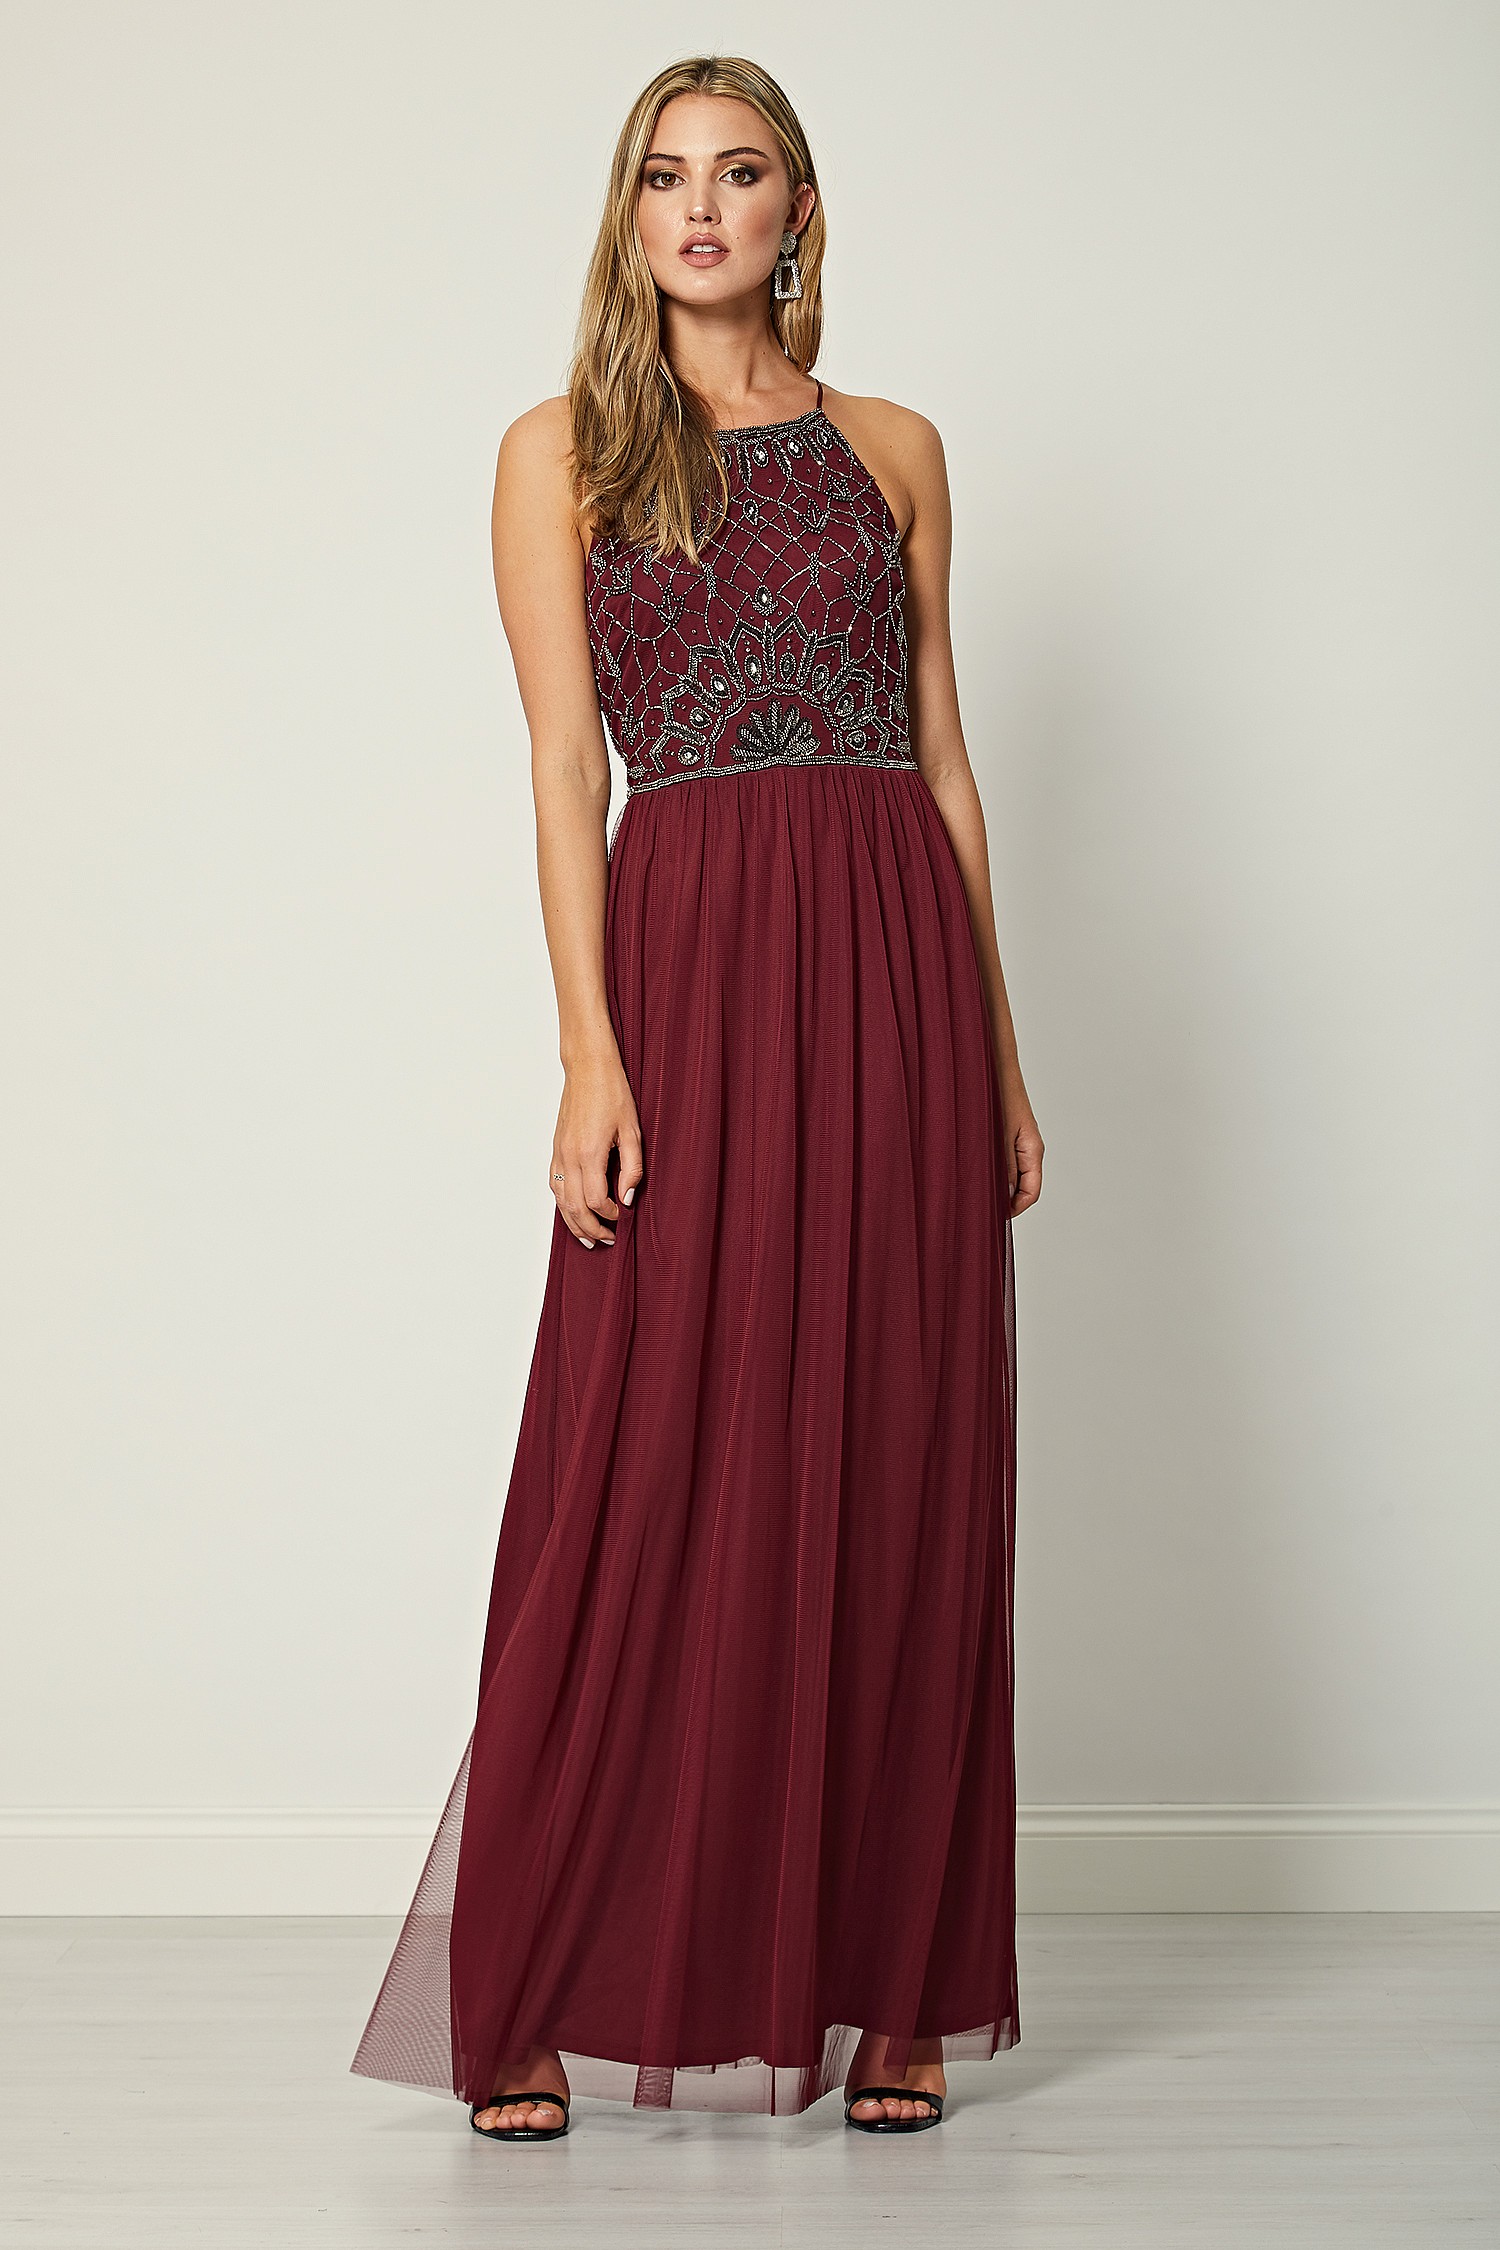 burgundy embellished maxi dress